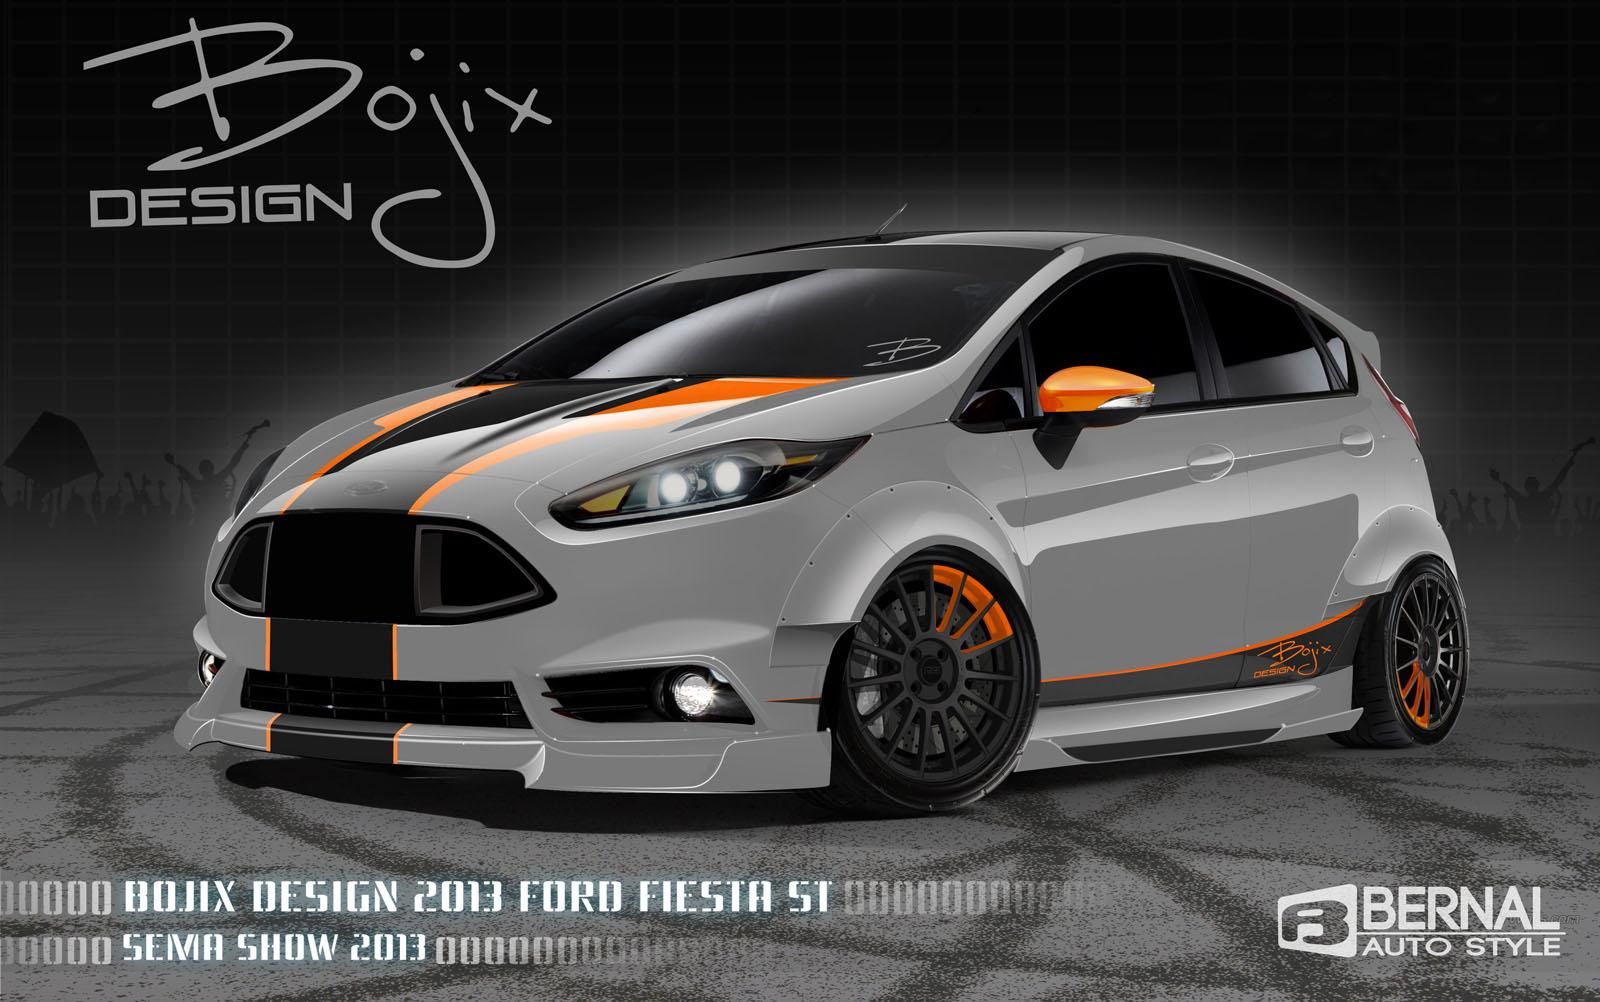 2014 Ford Fiesta ST by Bojix Design